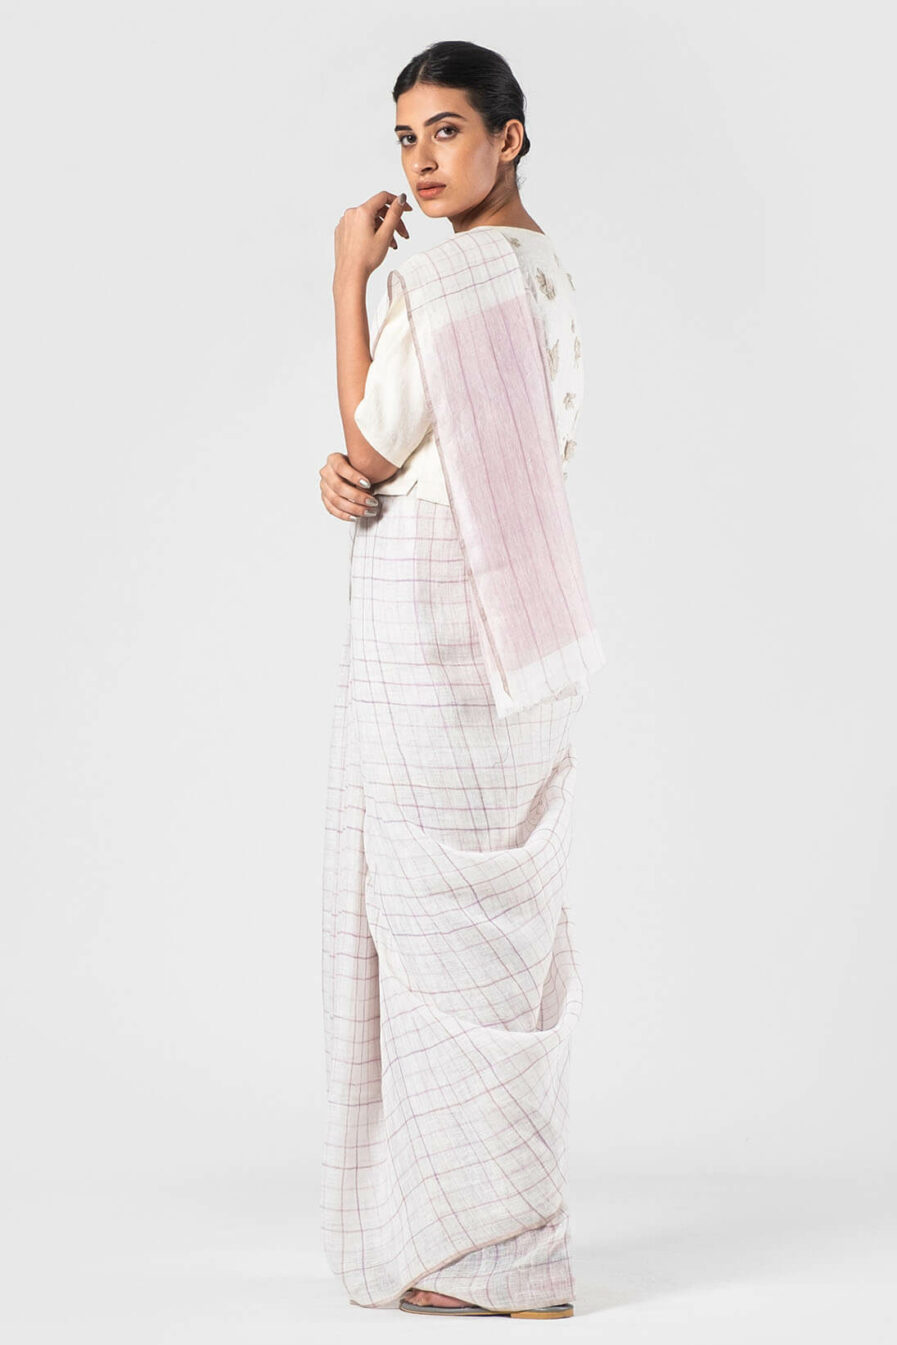 Anavila Lavender summer checkered linen sari